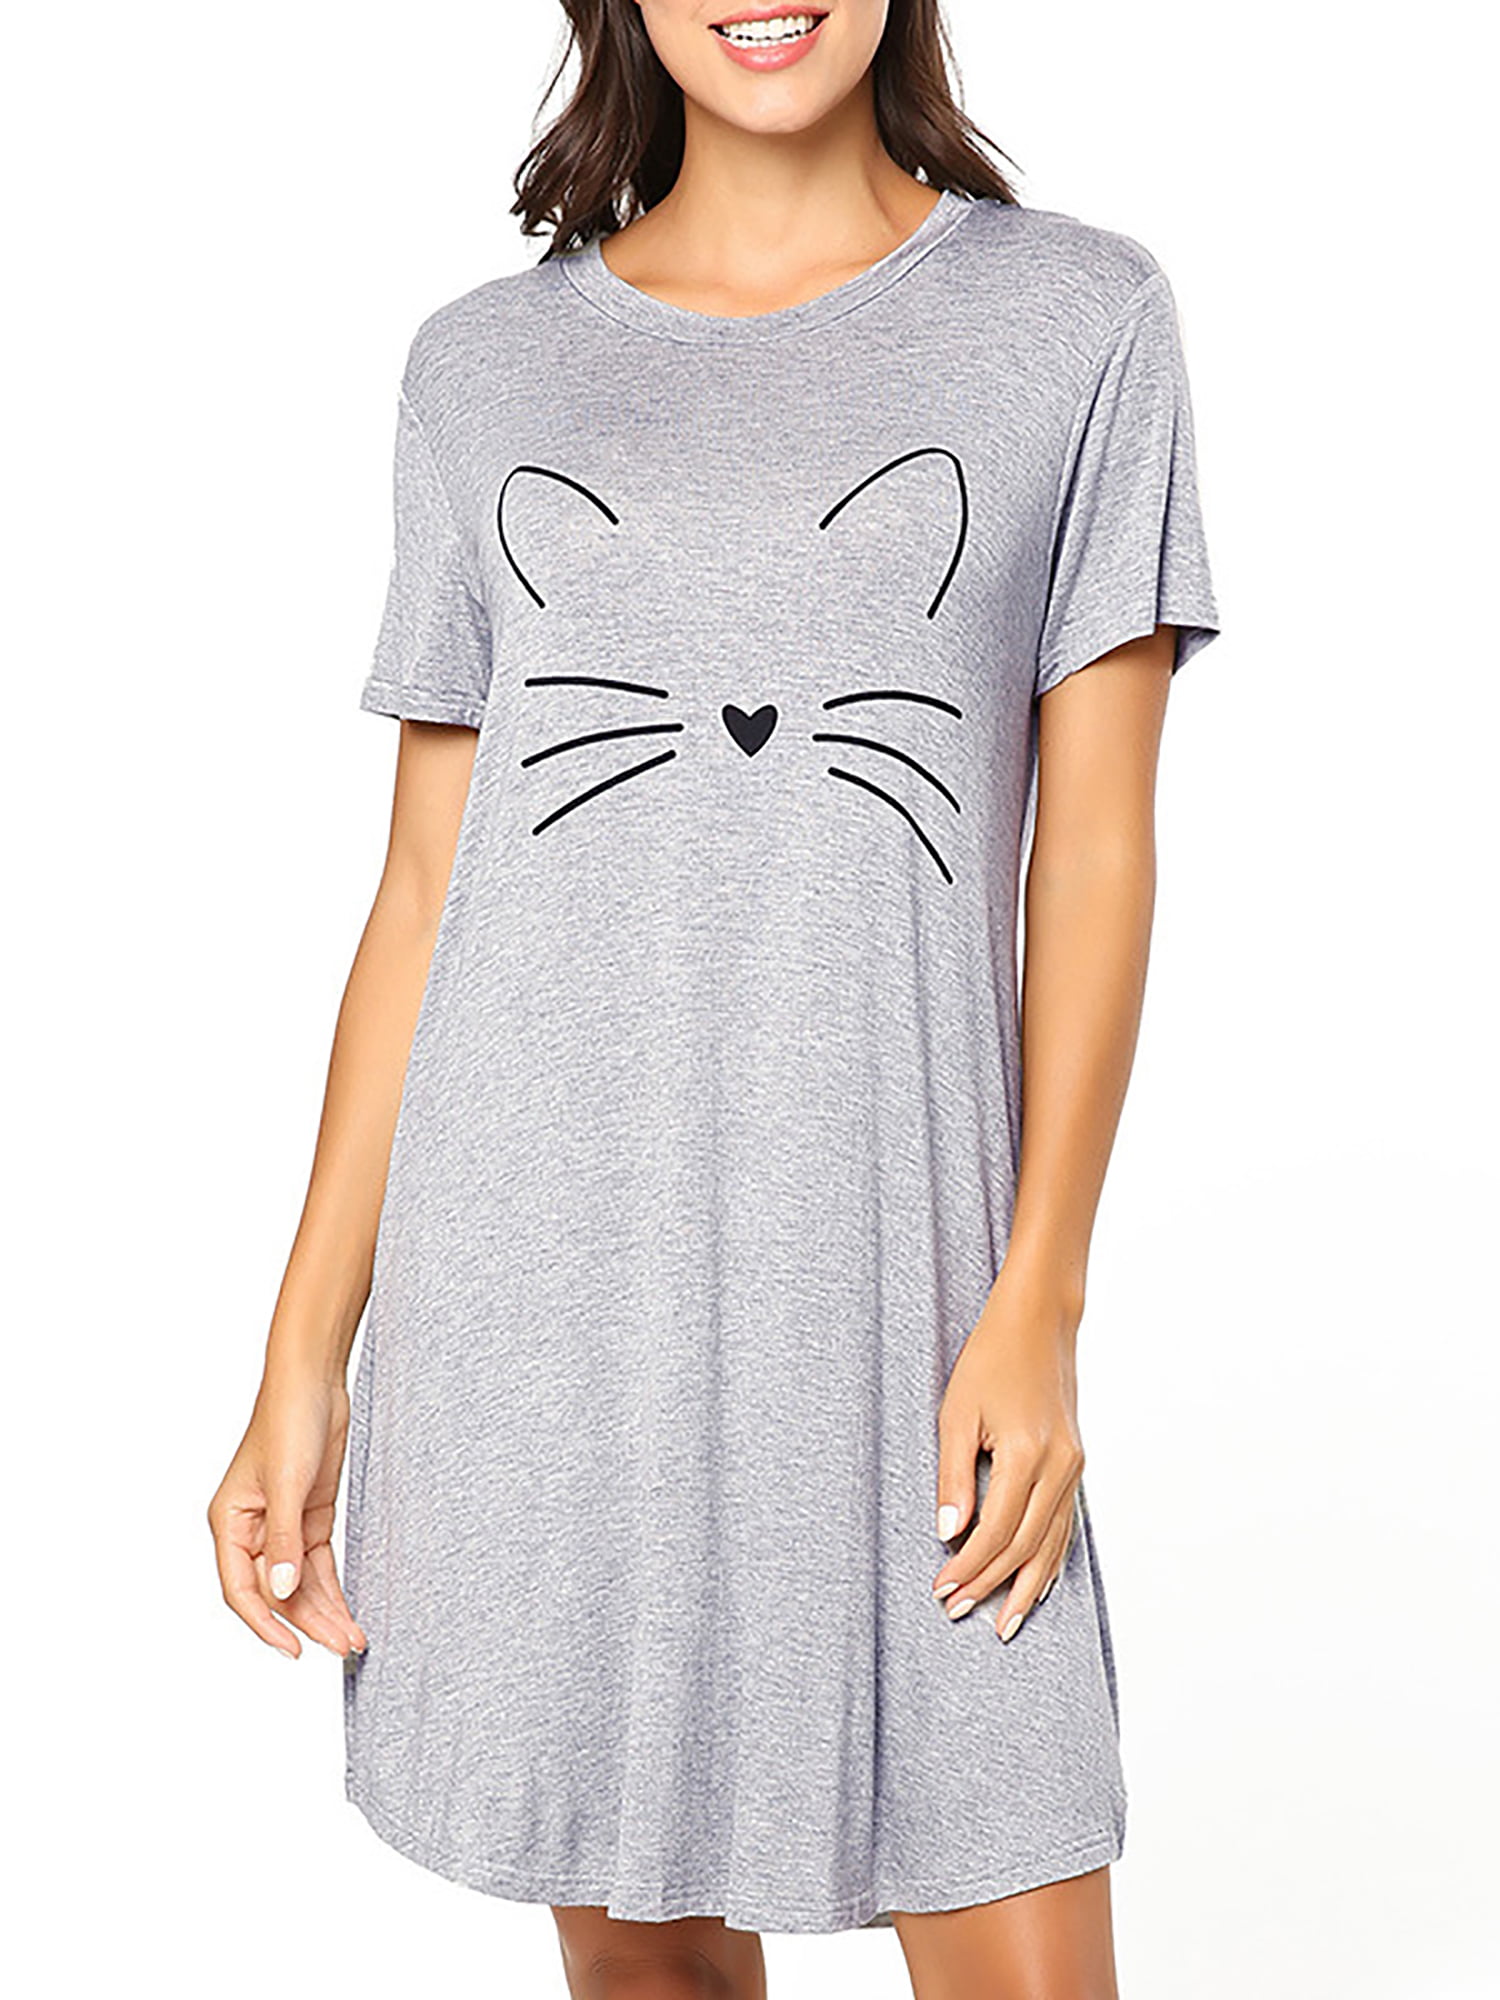 Selfieee - Selfieee Nightgown Womens Cotton Night Shirt For Sleeping ...